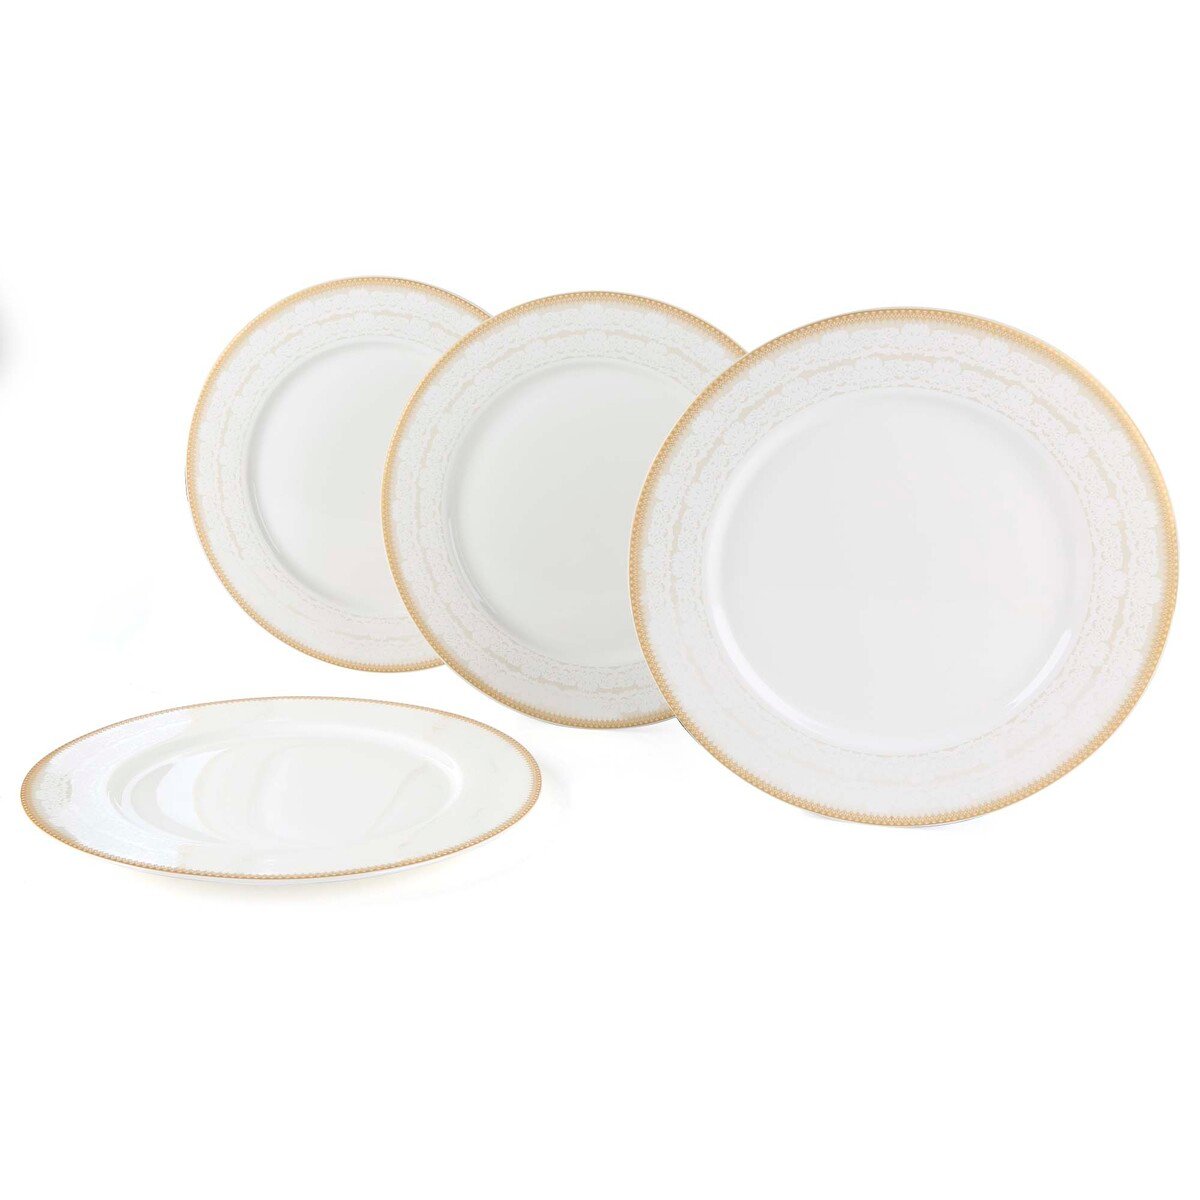 Home Porcelain Dinner Plate 10.5" Inch 4Pcs Gold